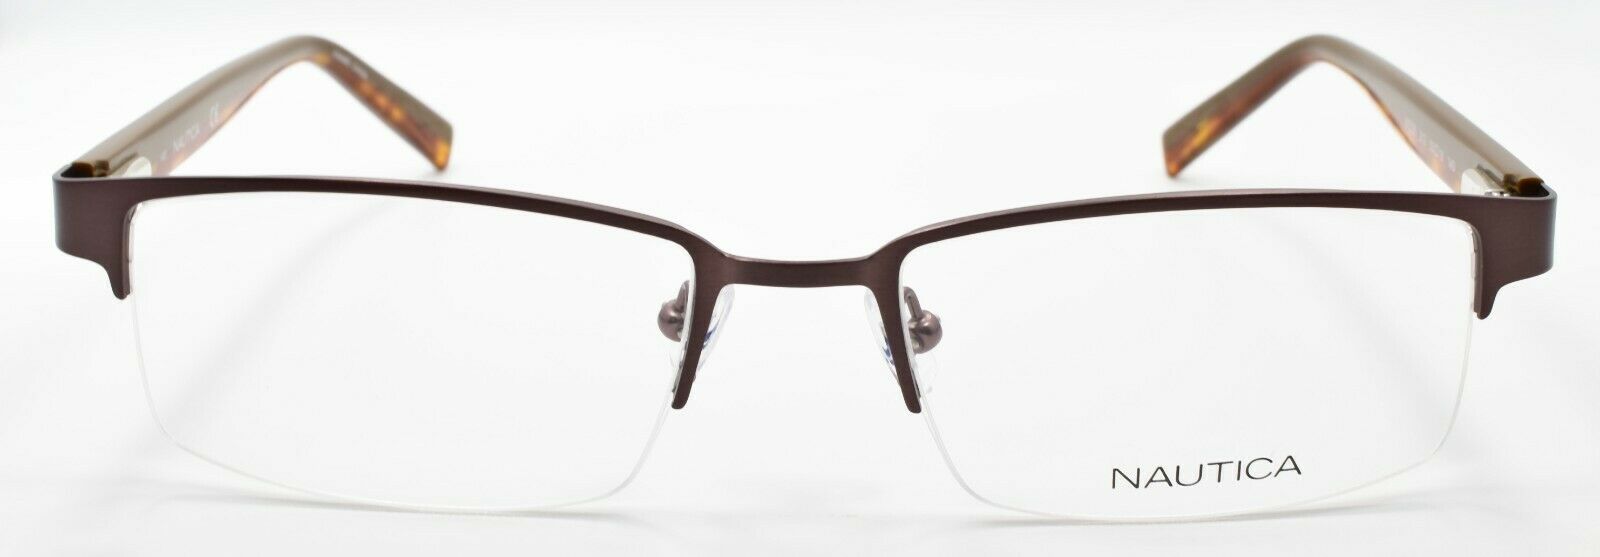 2-Nautica N7229 212 Men's Eyeglasses Frames Half-rim 53-18-140 Light Brown-688940442540-IKSpecs